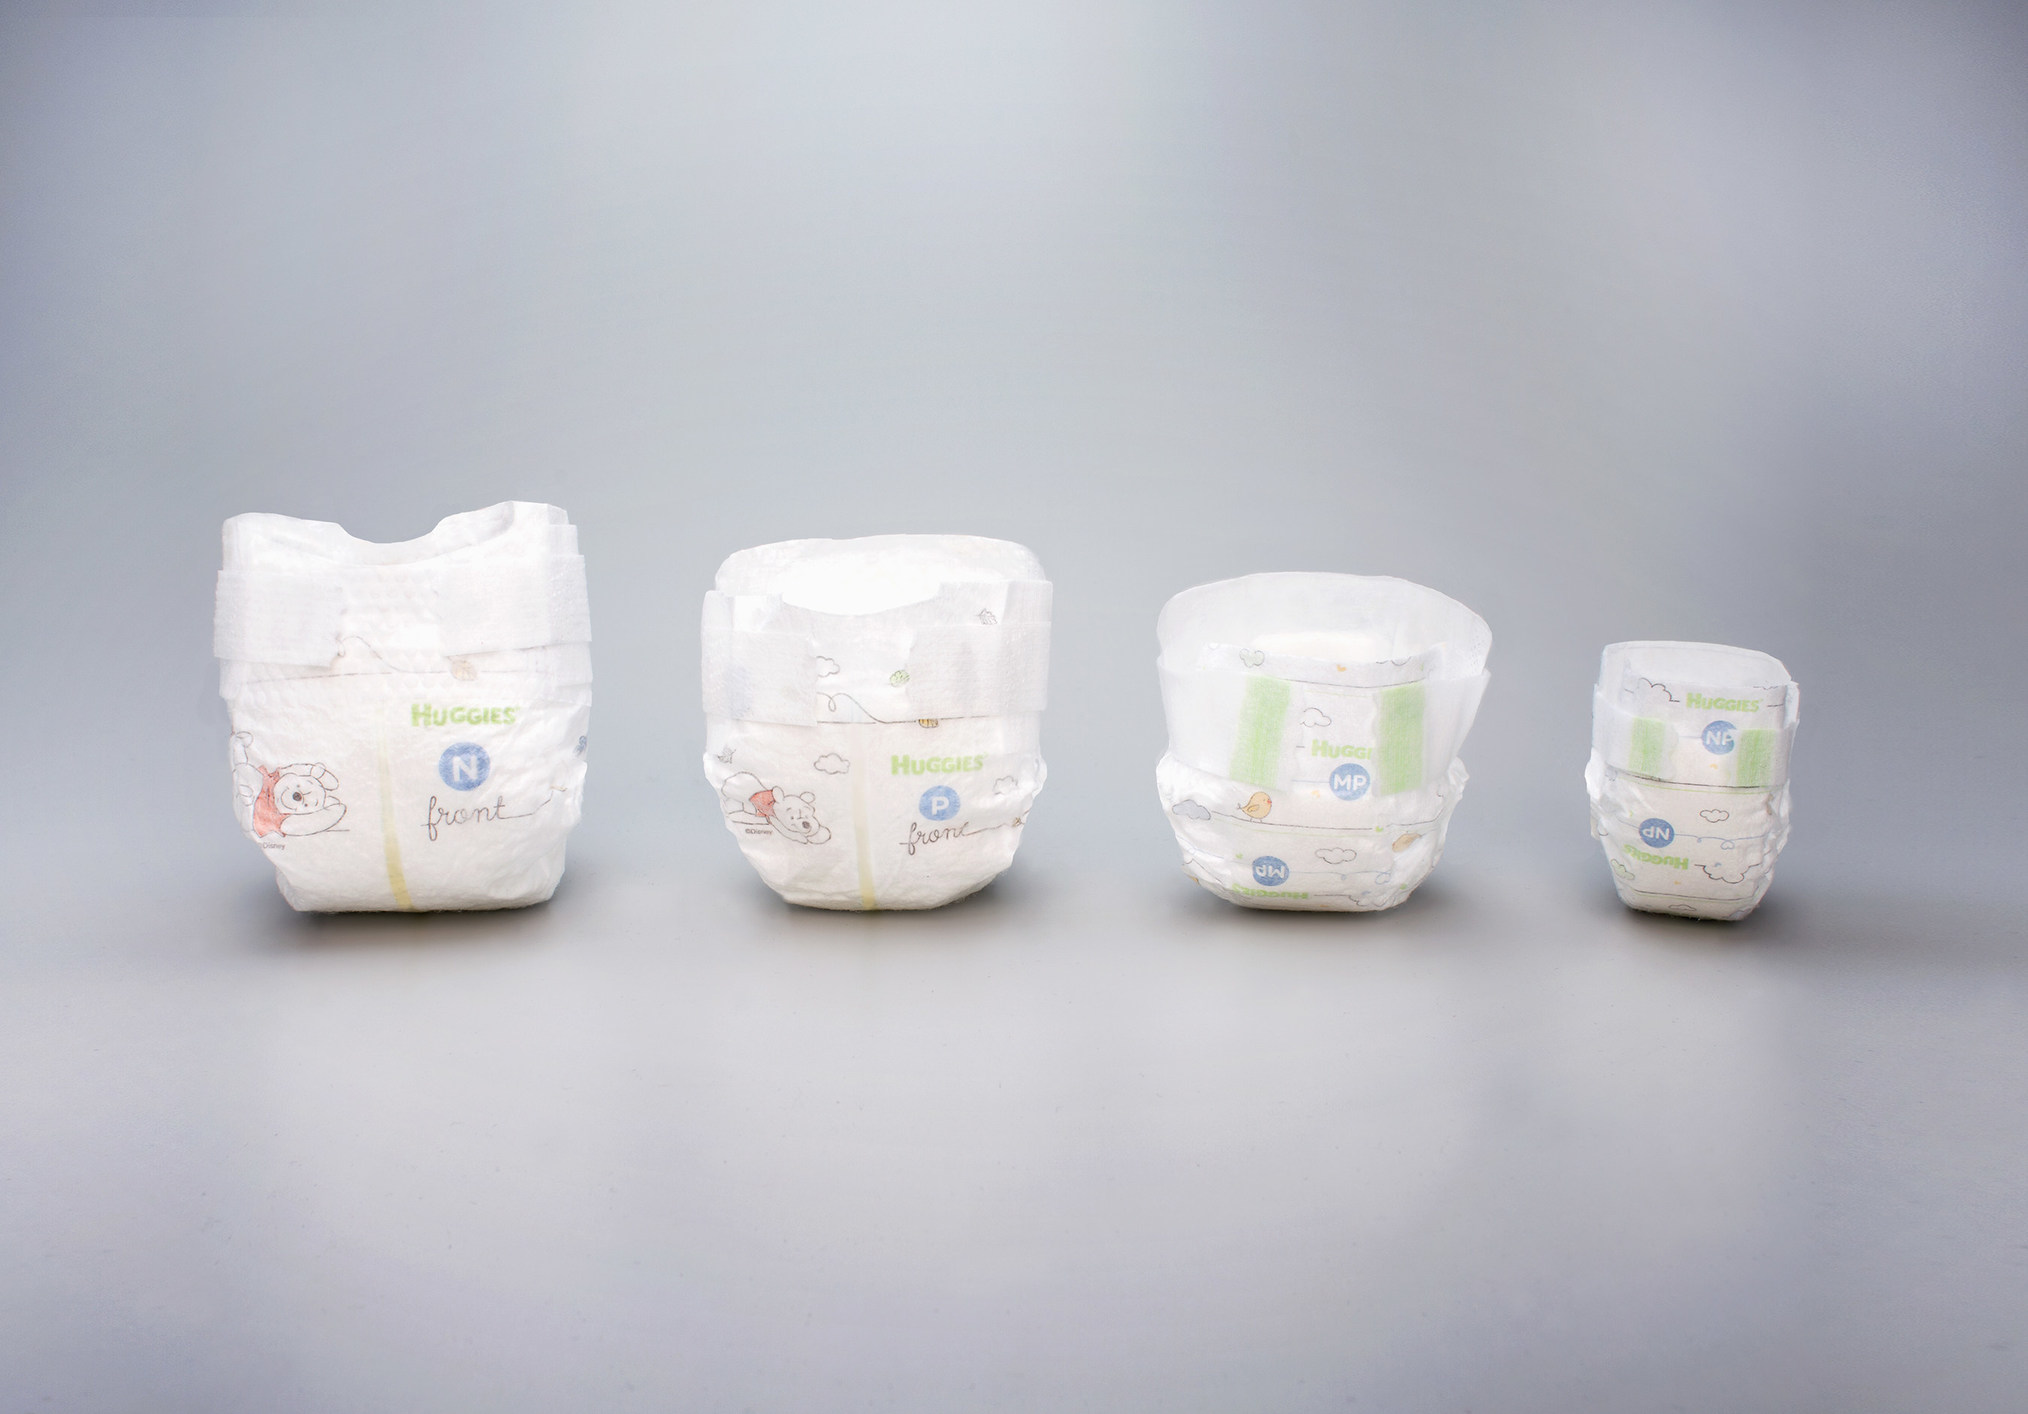 Huggies creates new tiny diapers for nano preemie babies